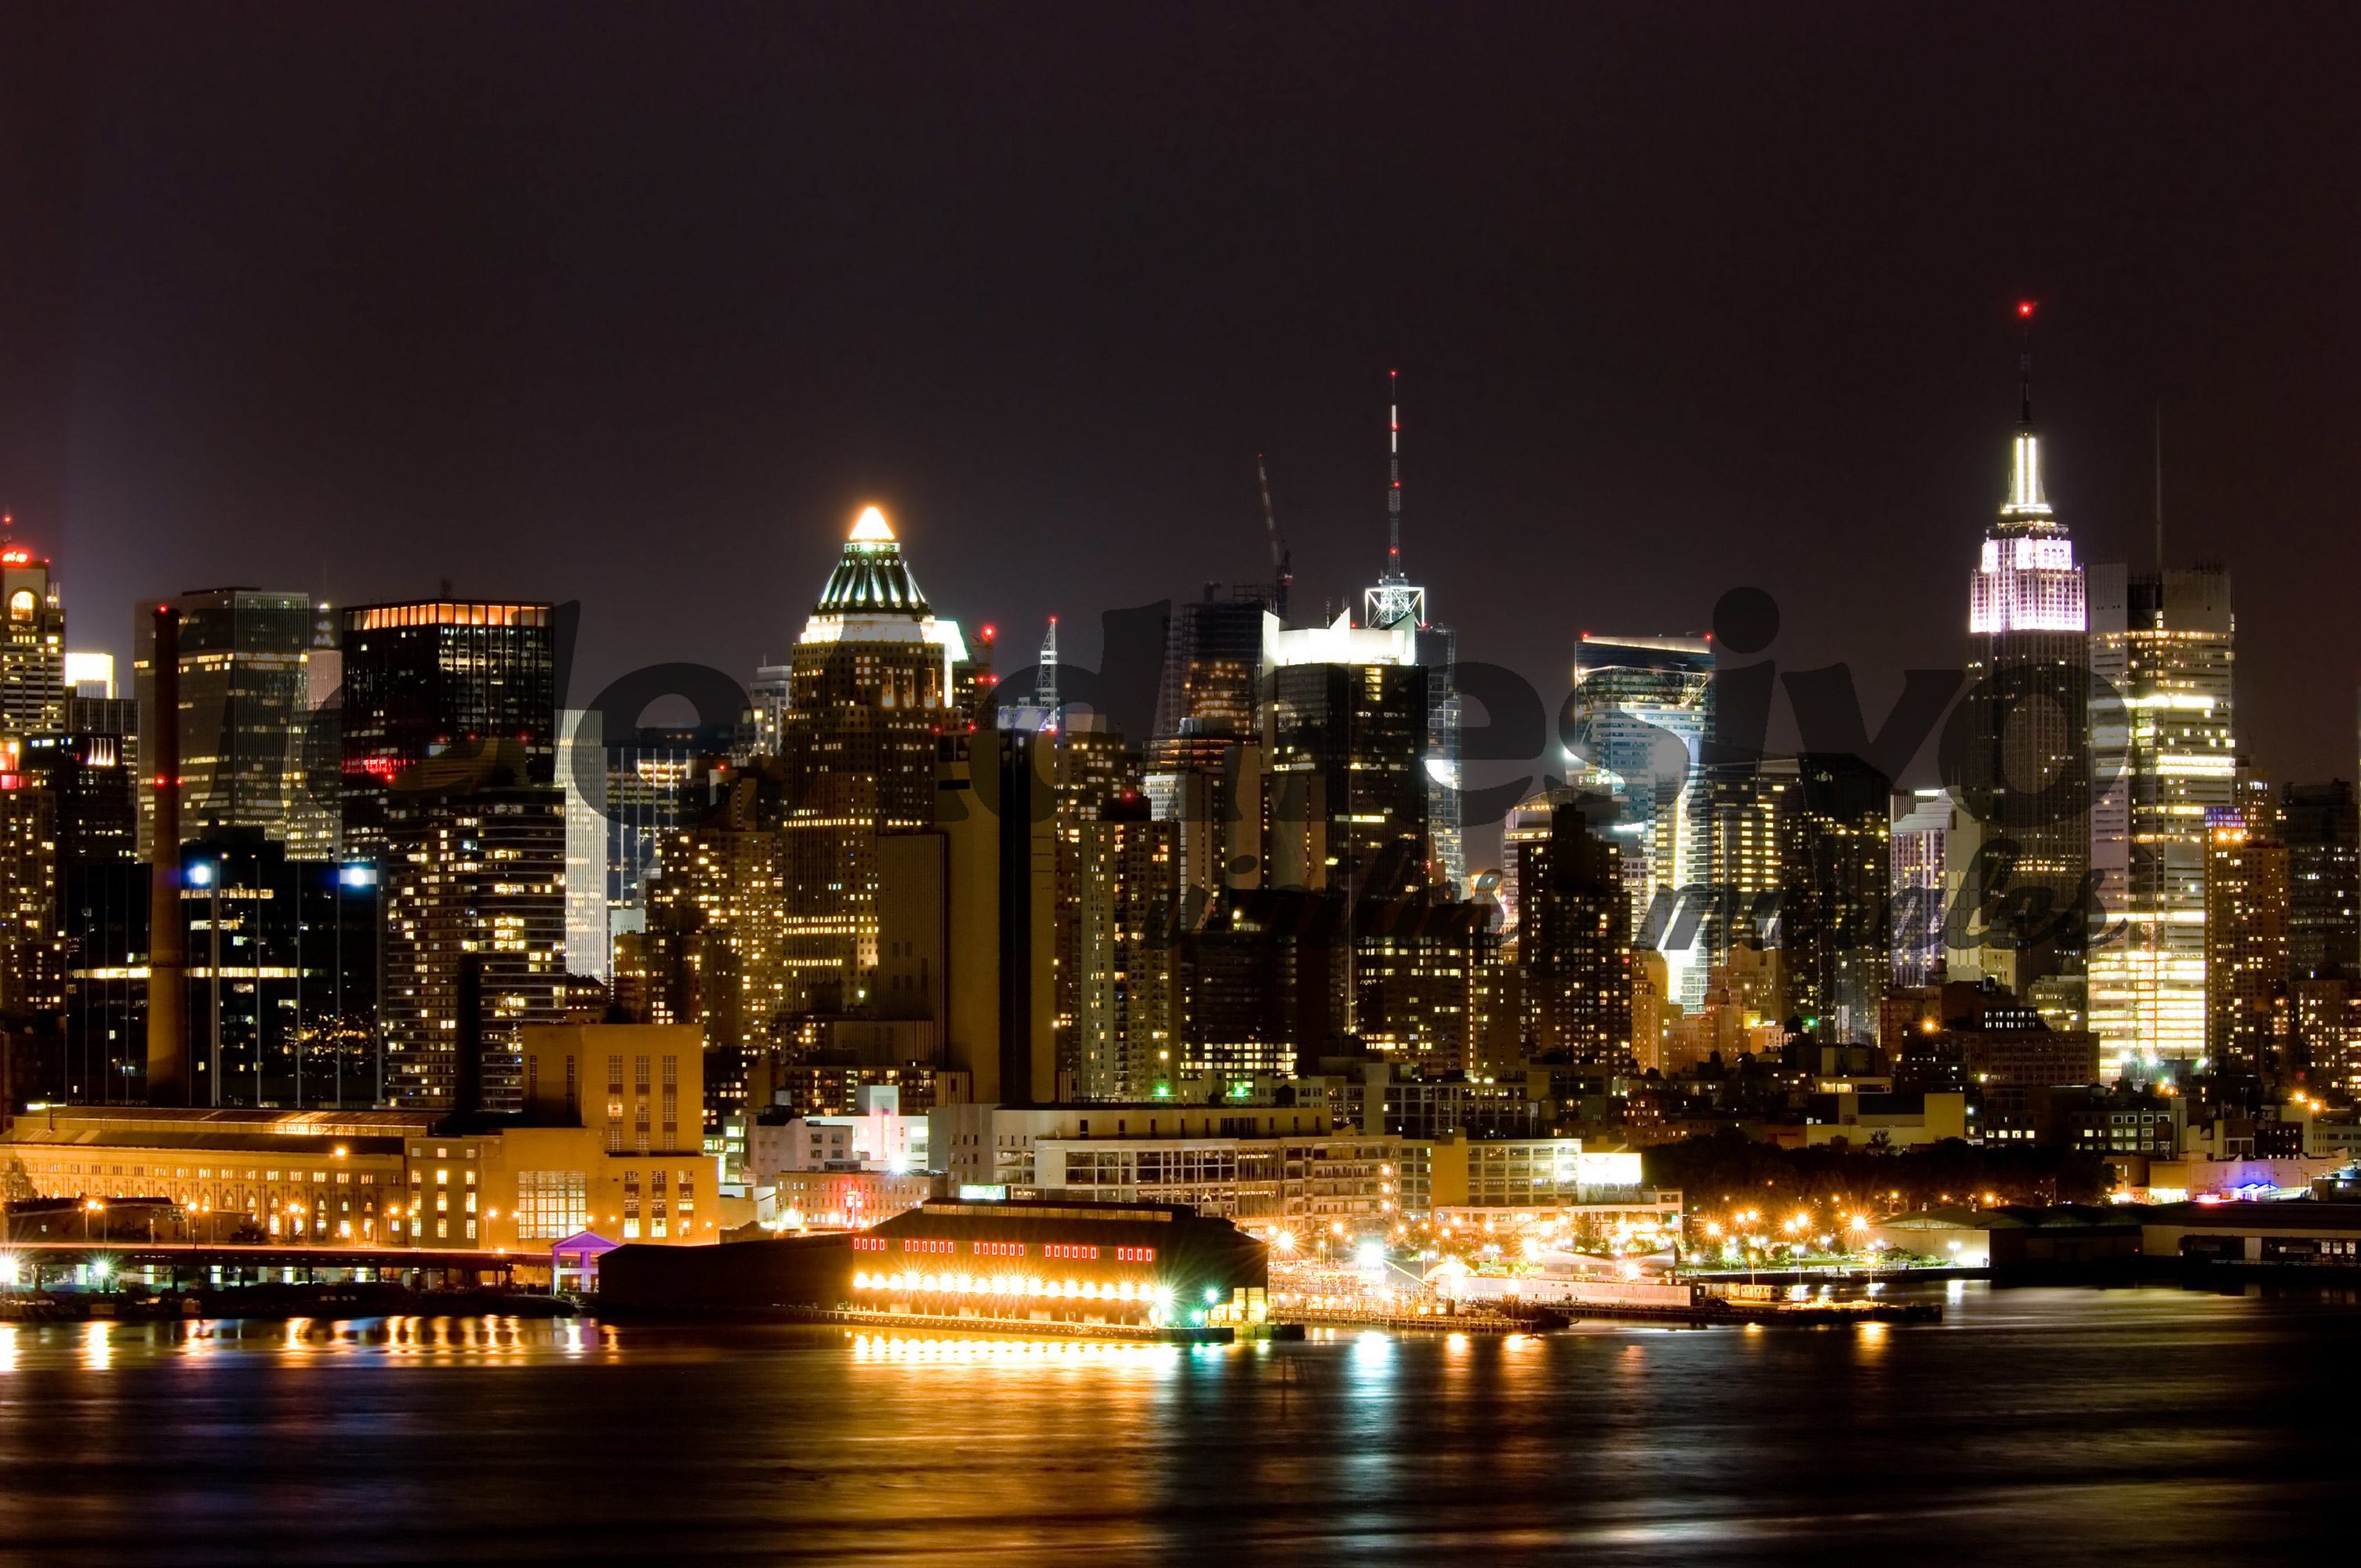 Fotomurales: New York nocturna